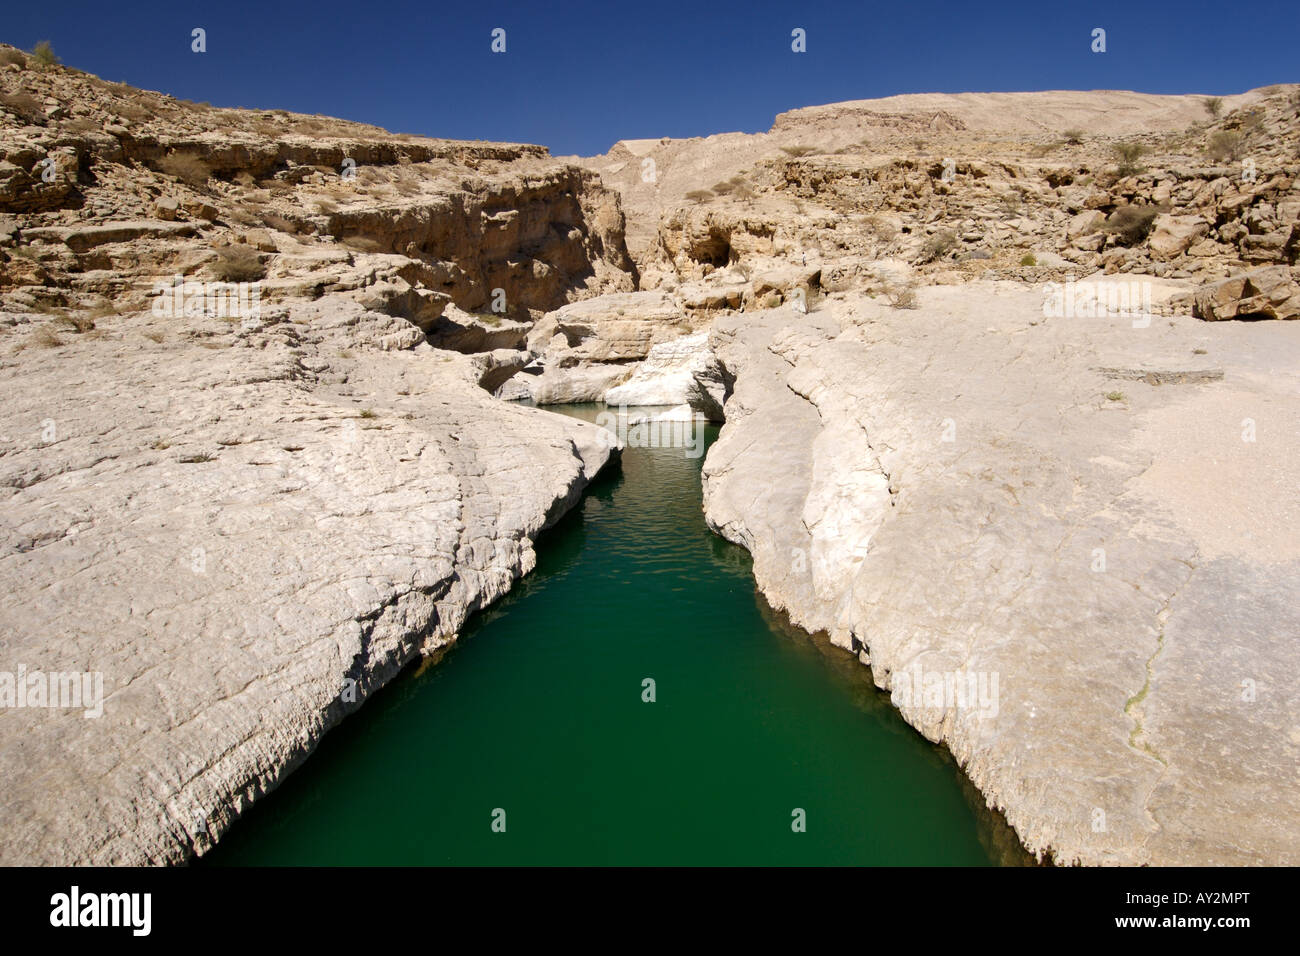 The turquoise waters of Wadi Bani Khalid in the eastern Hajar mountains (Al Hajar ash sharqi) in the Sultanate of Oman. Stock Photo